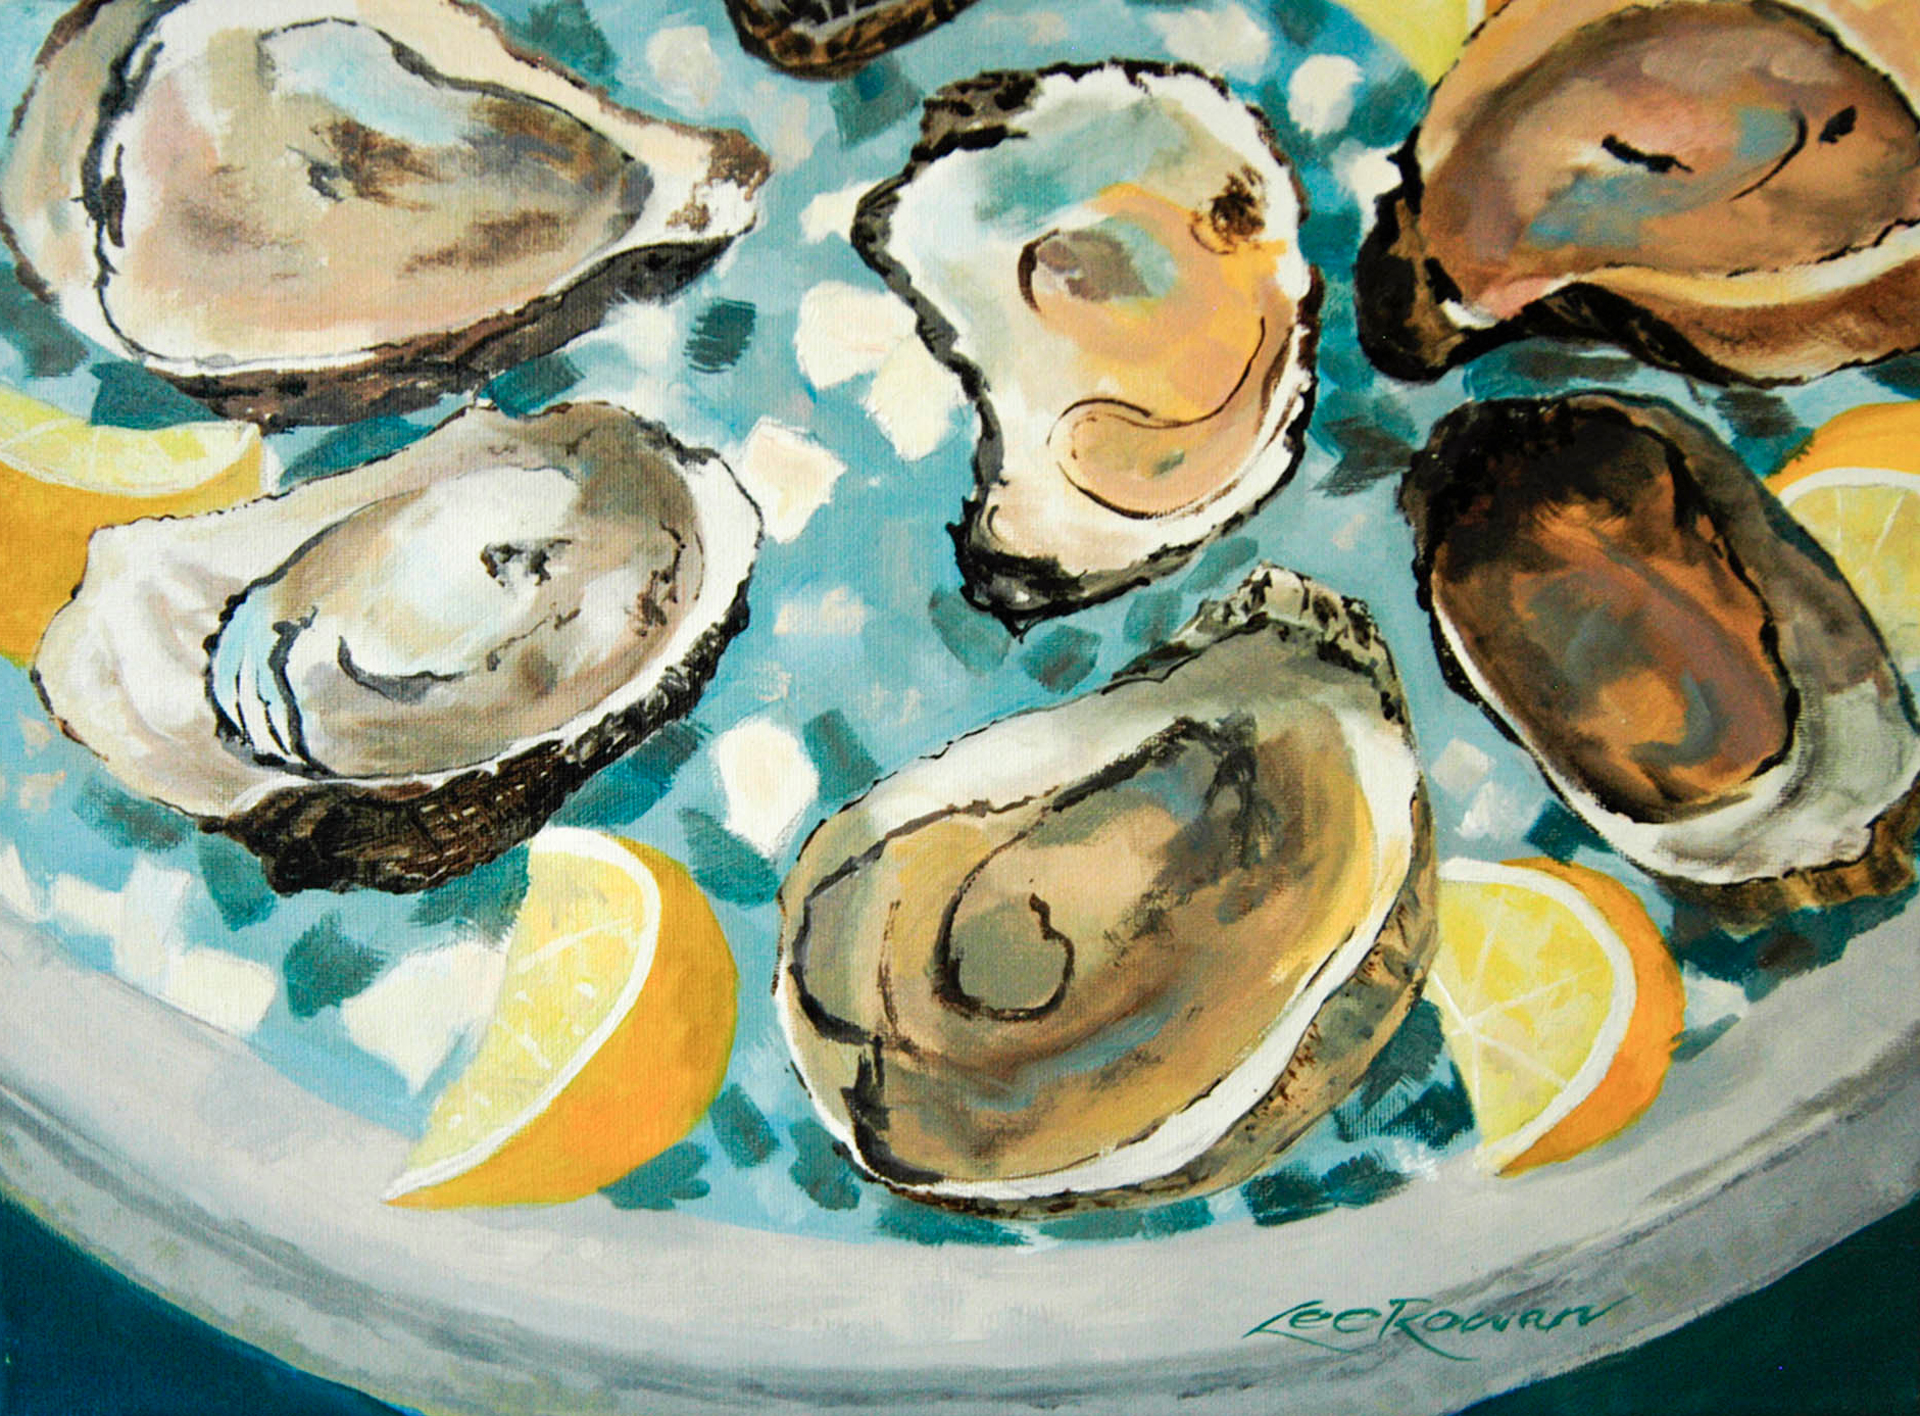 Plate of Oysters by Lee Rowan